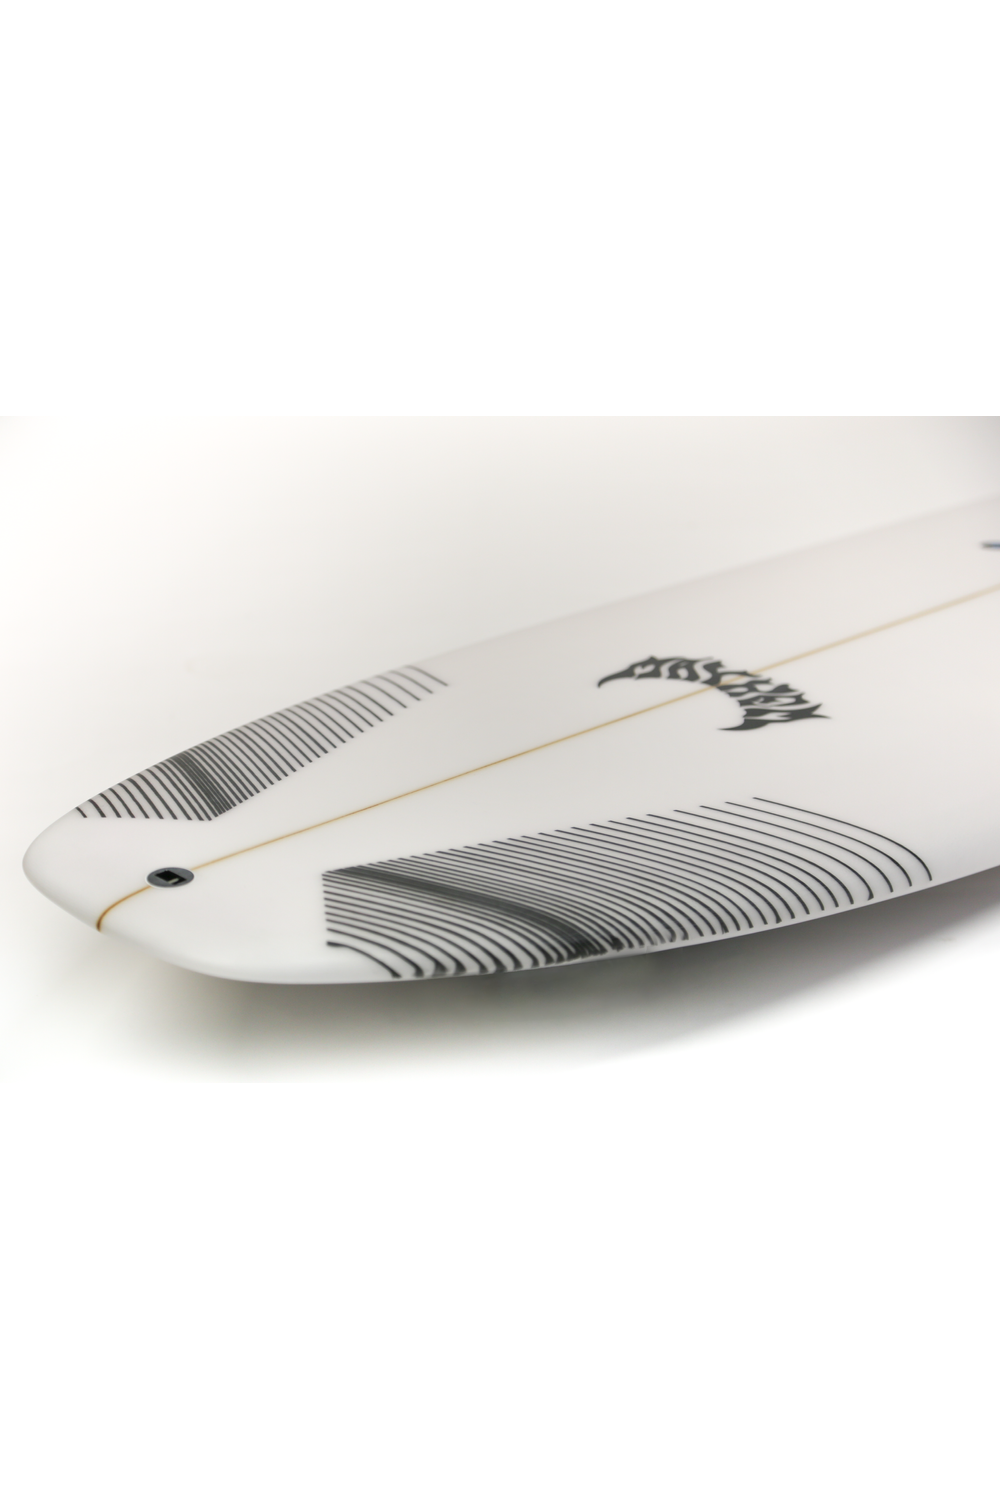 Lost Puddle Jumper, 6'0 Surfboard 42.00L PU Futures 5 Fins